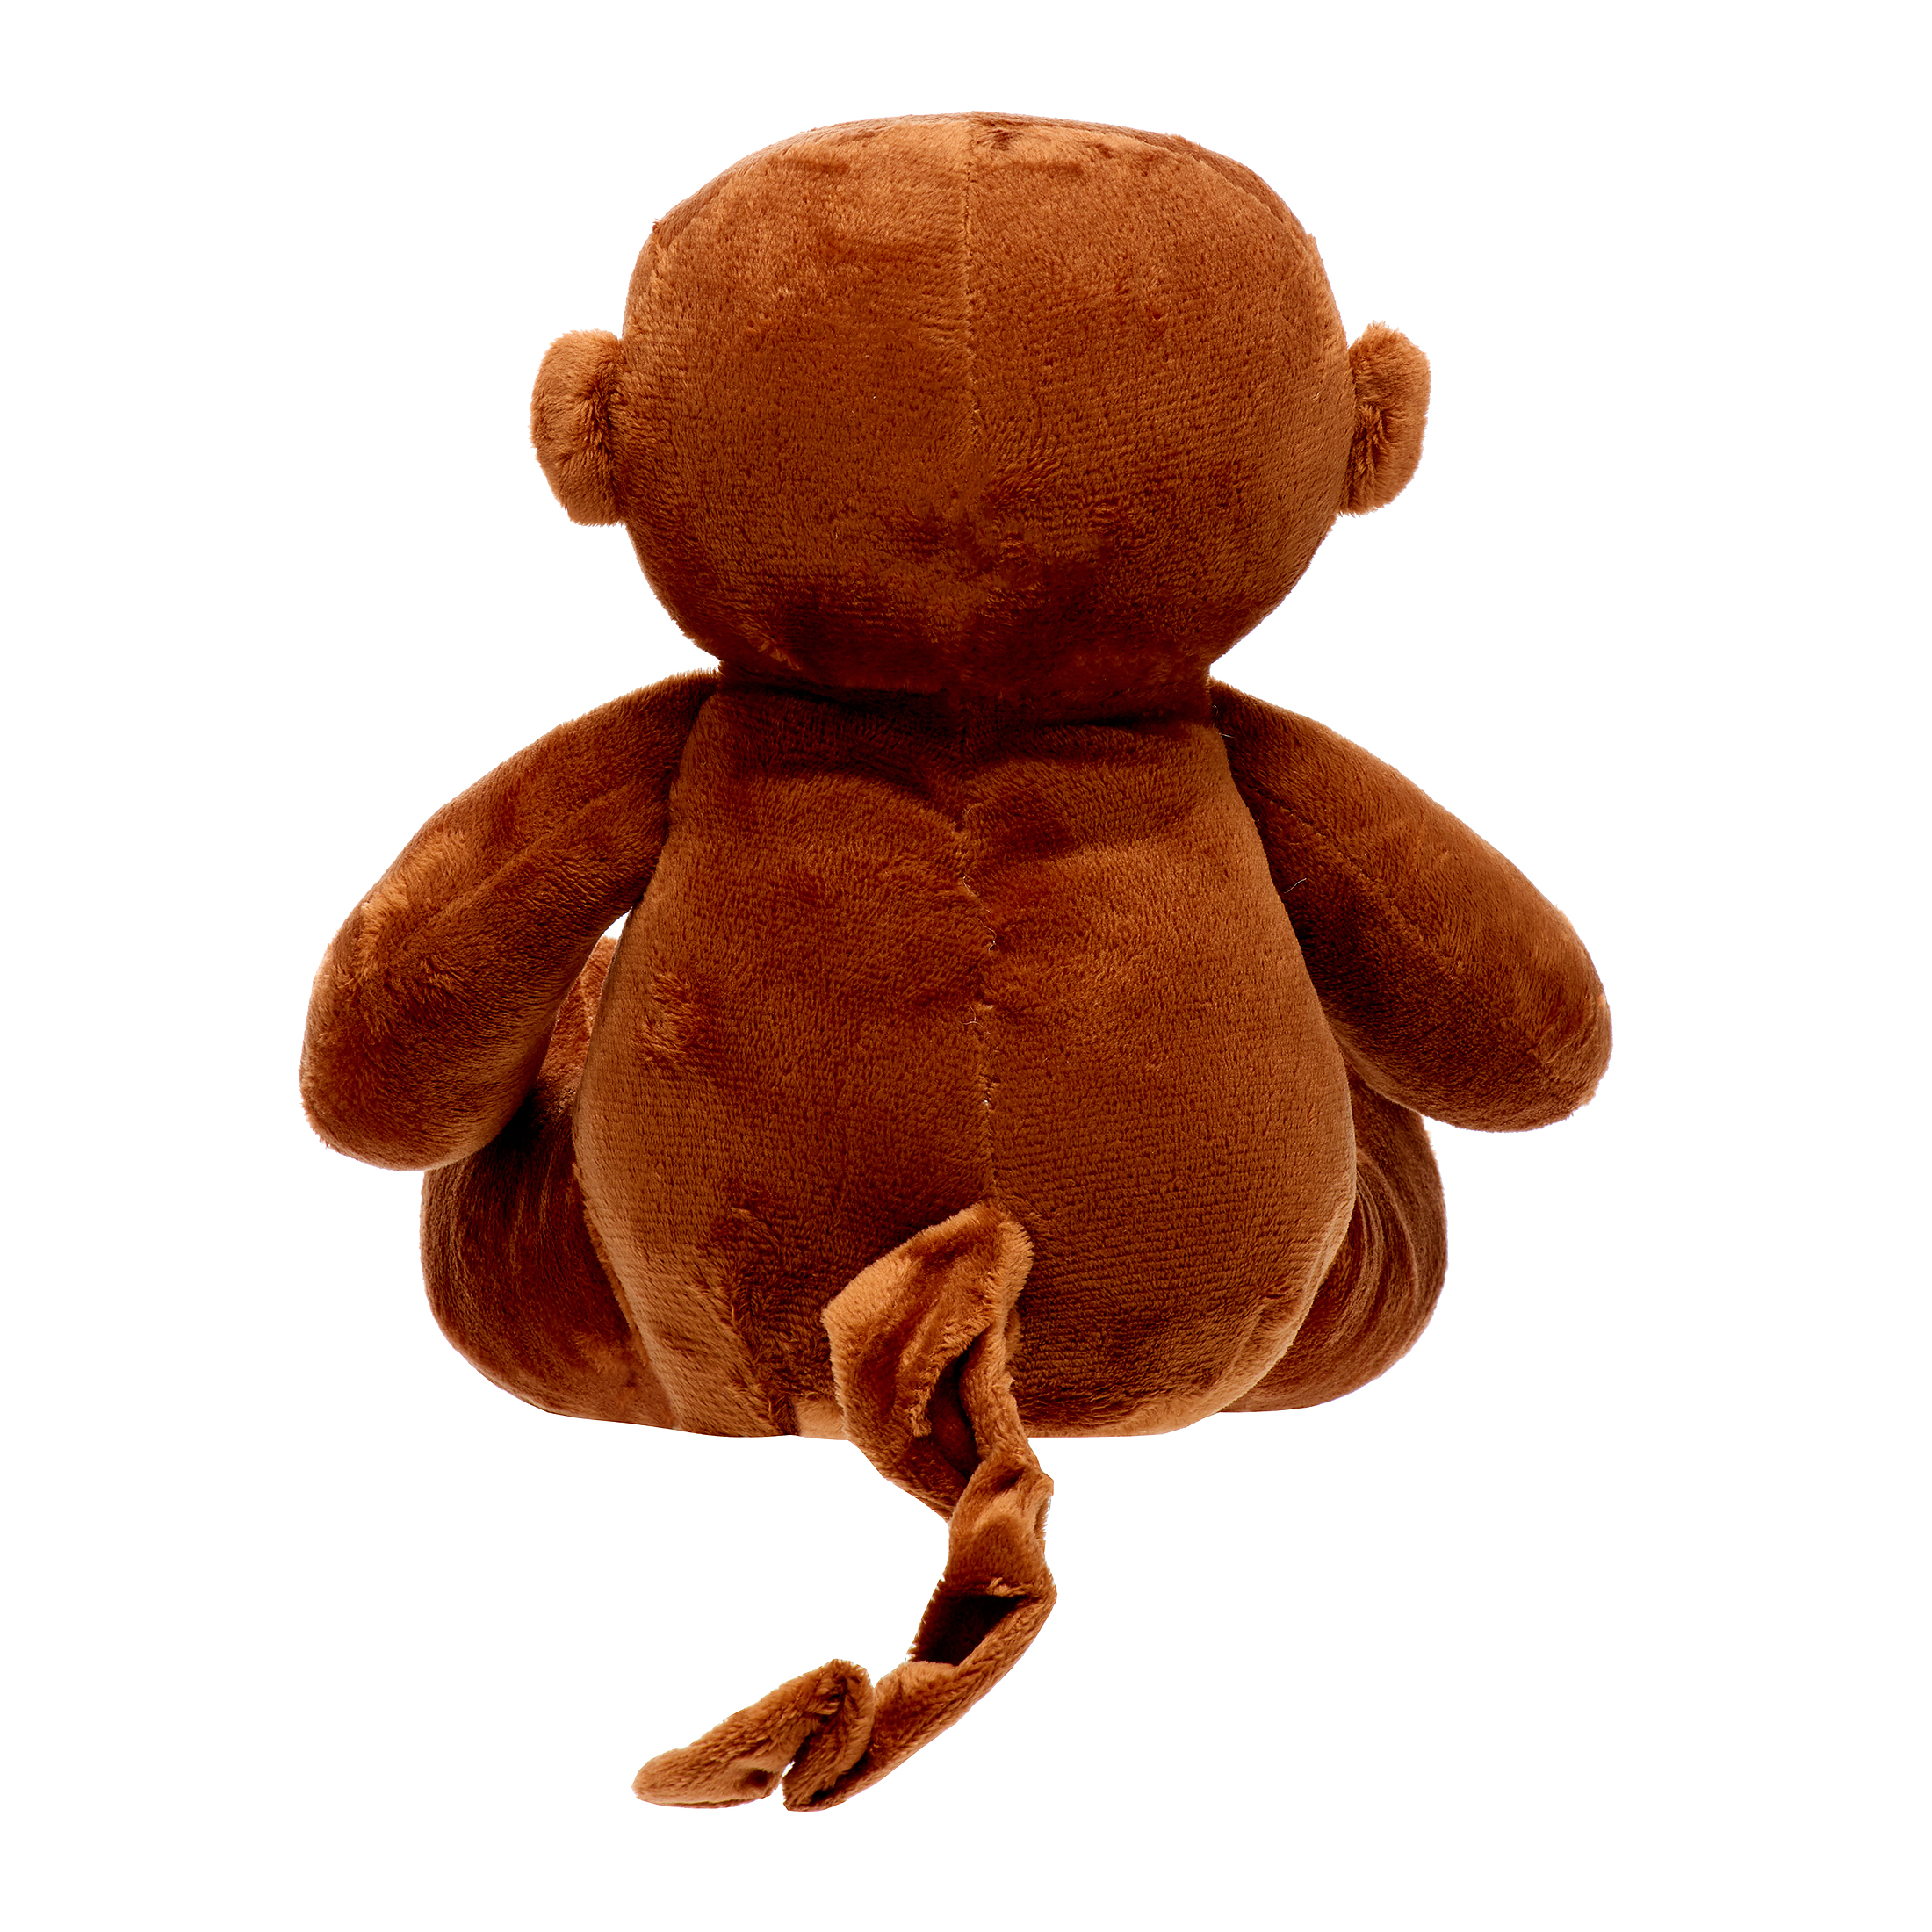 Bedtime Originals Brown Plush Monkey Stuffed Animal - Ollie - image 5 of 6